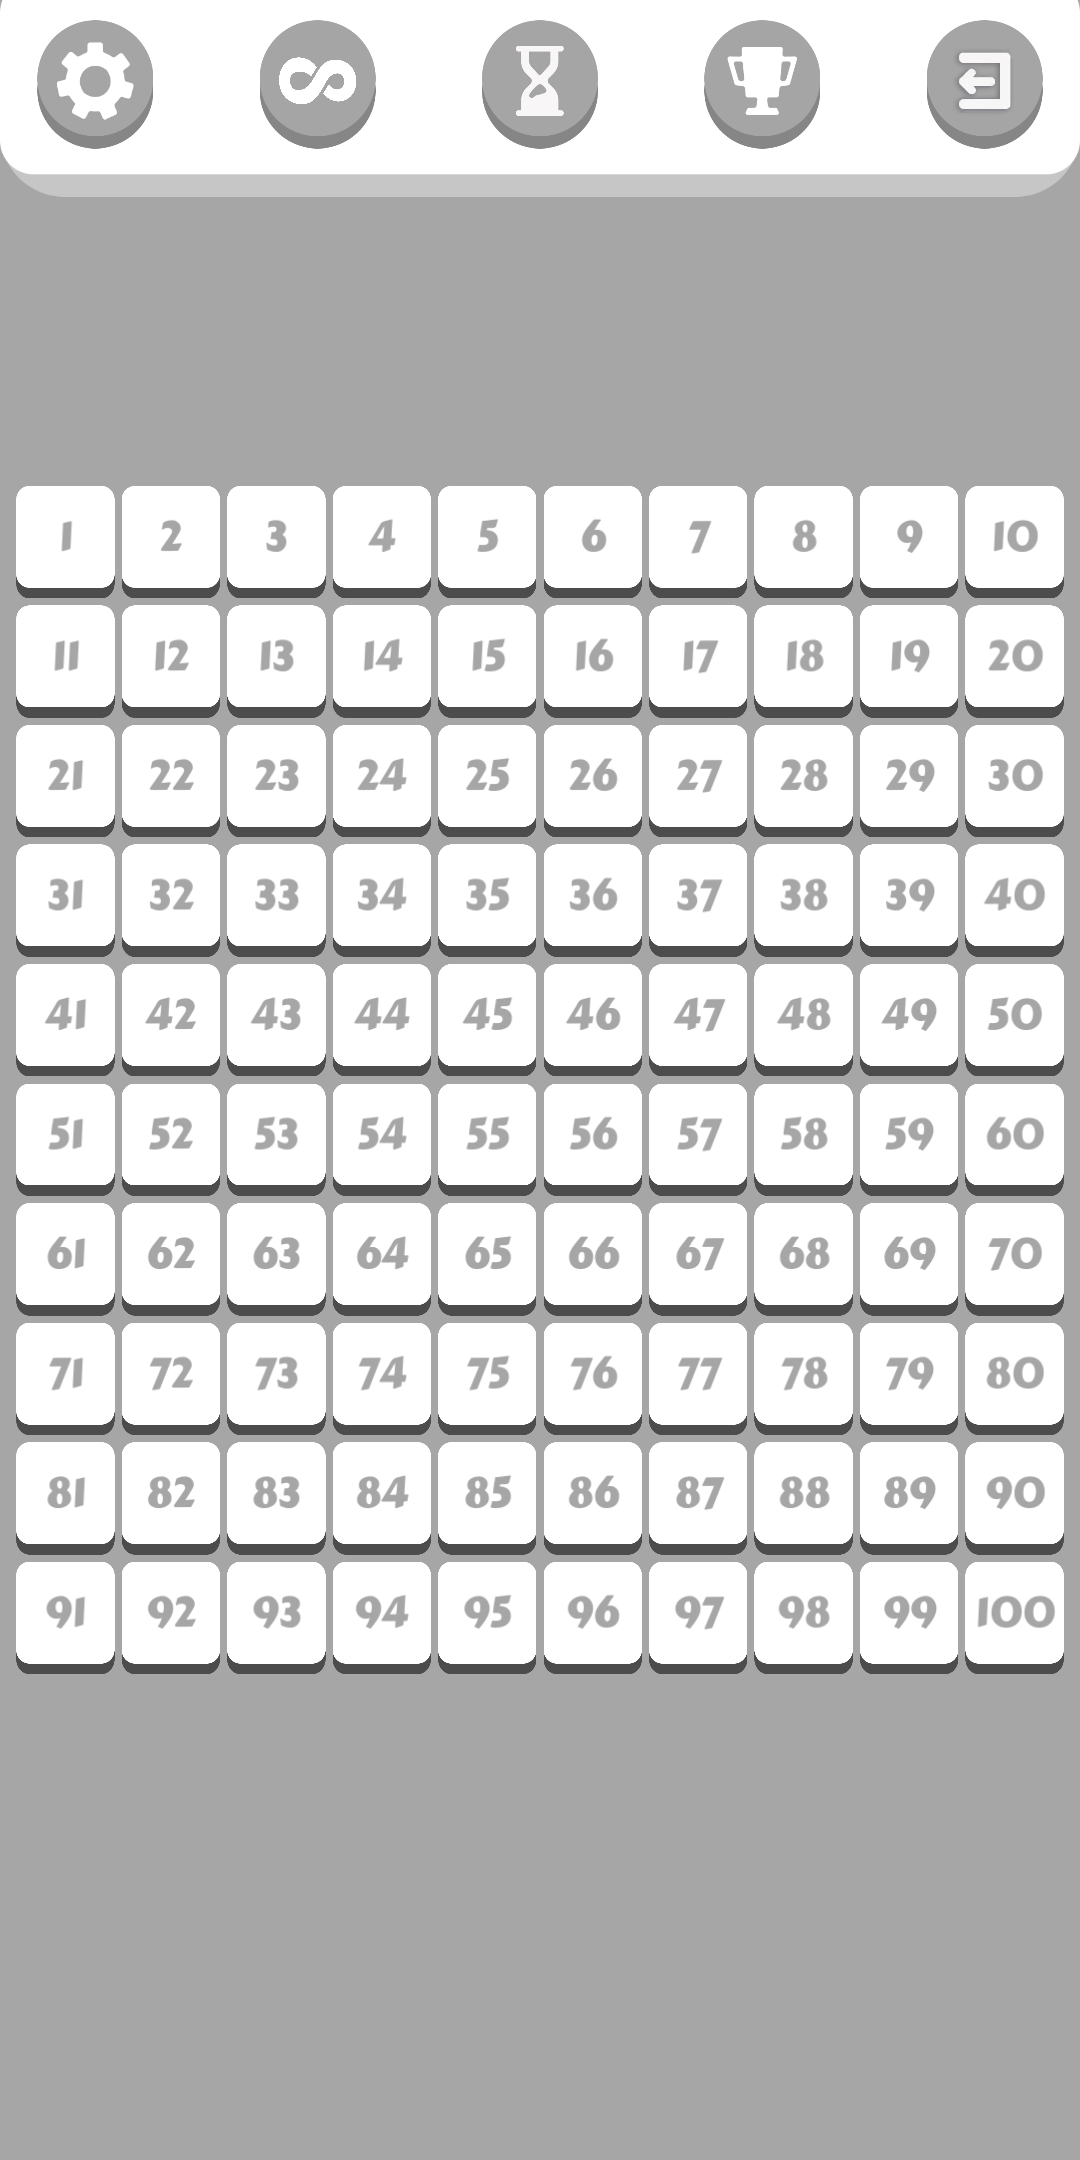 100 Numbers Challenge 2